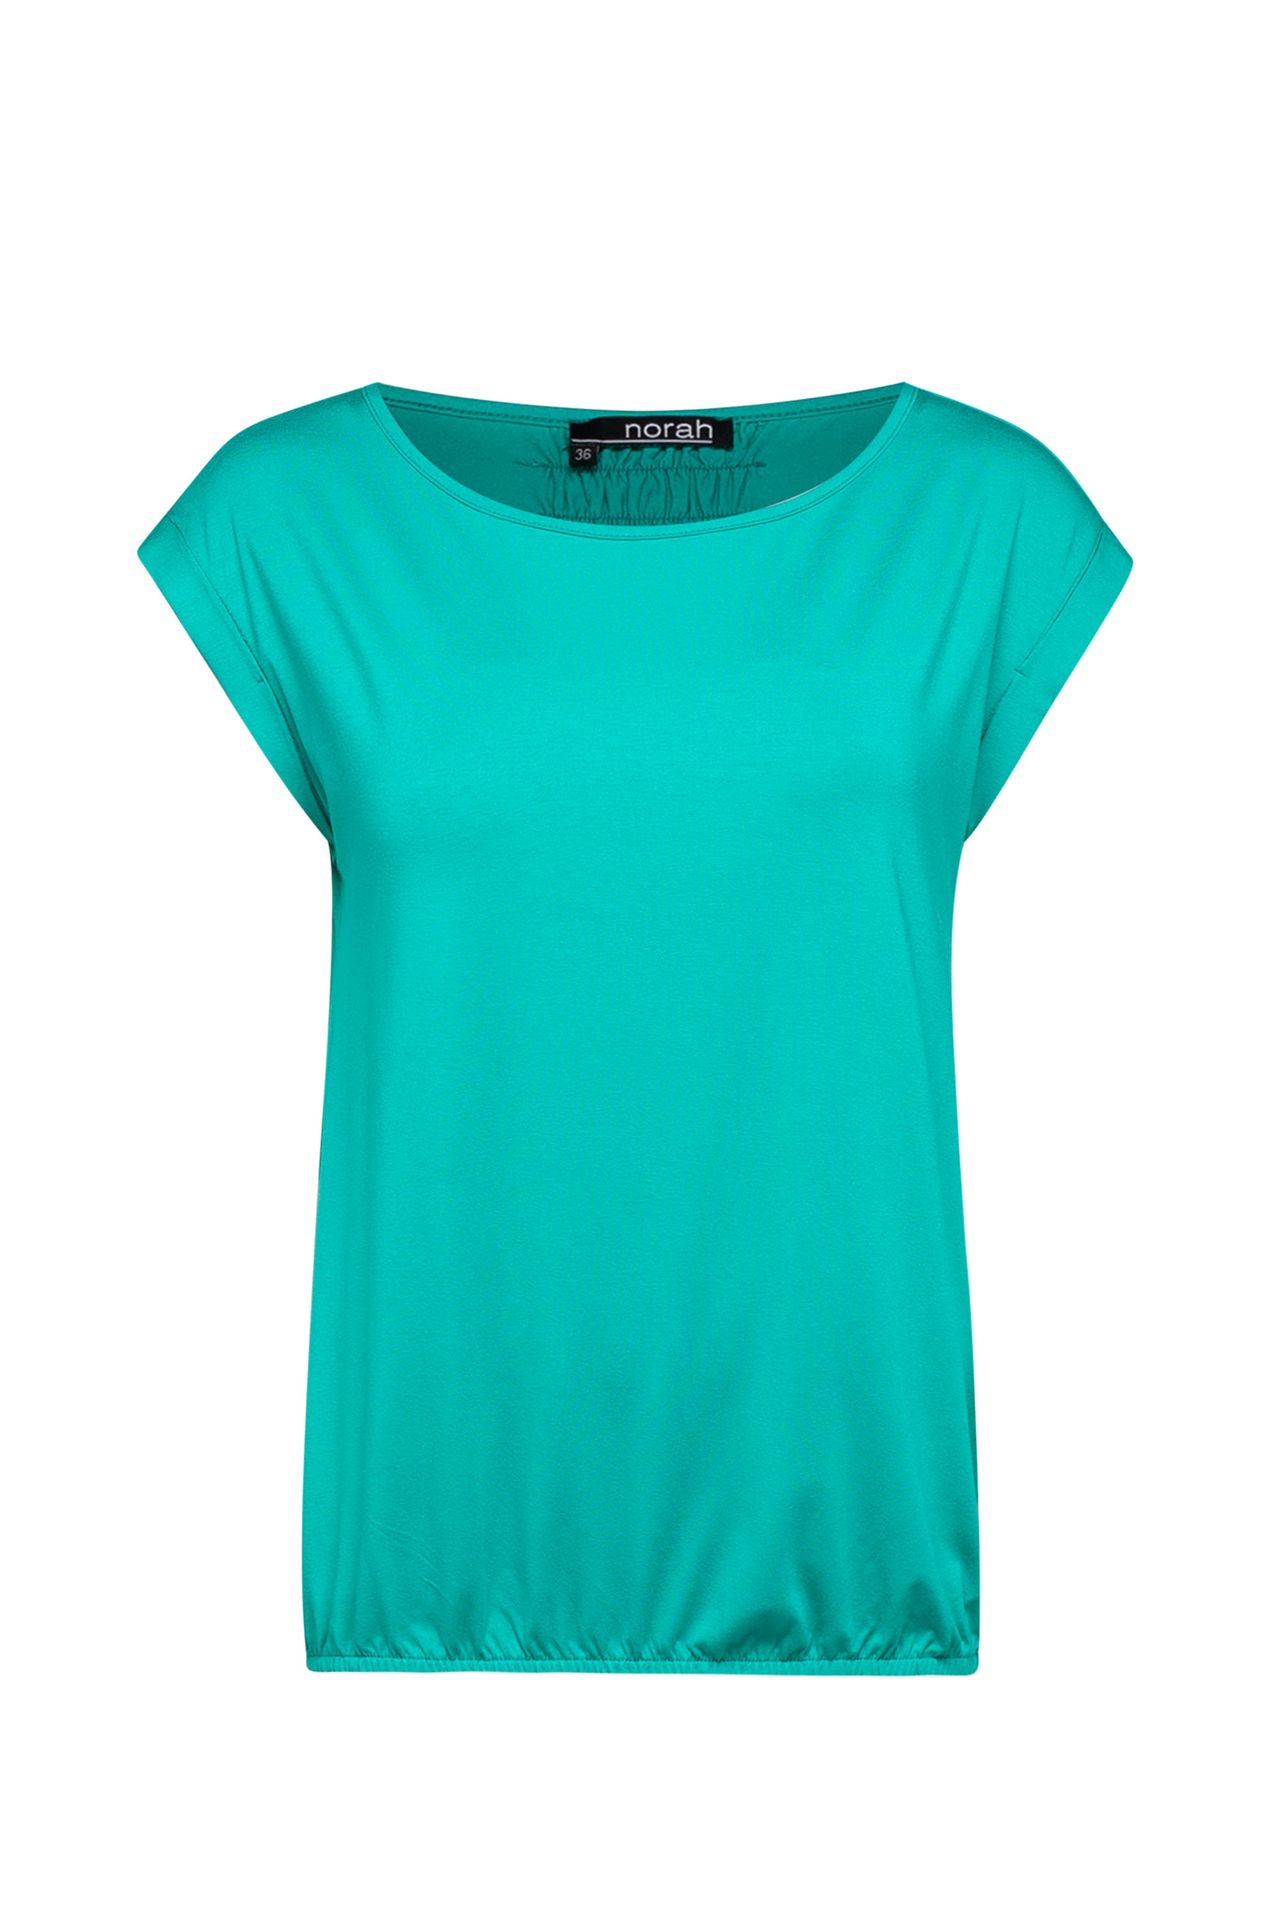 Norah Shirt Marije blauw jade 203656-574